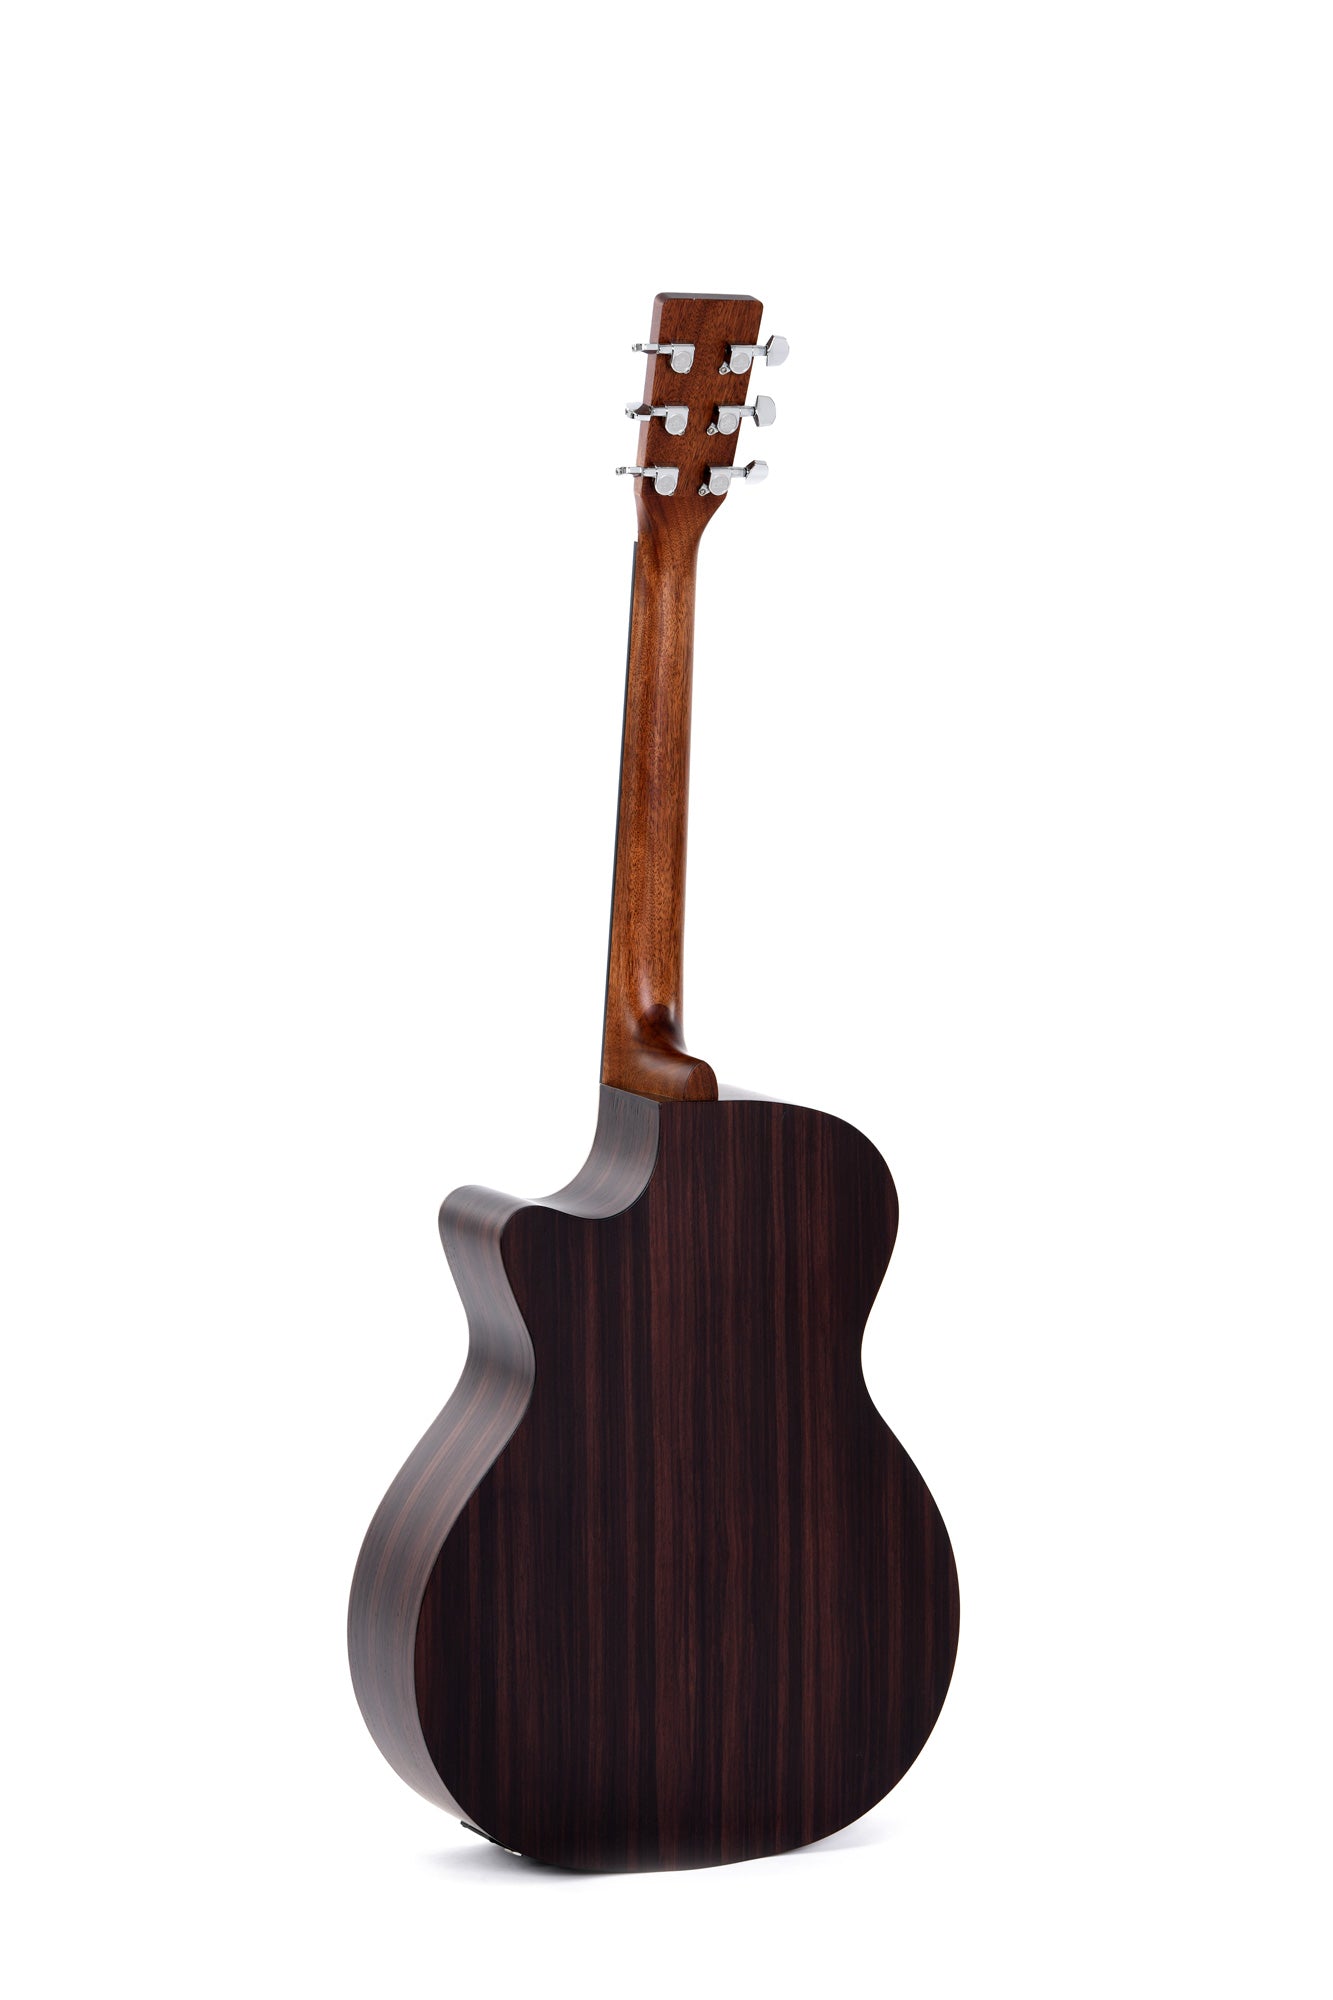 Sigma GTCE Electric Acoustic Guitar (Natural Color) 木結他